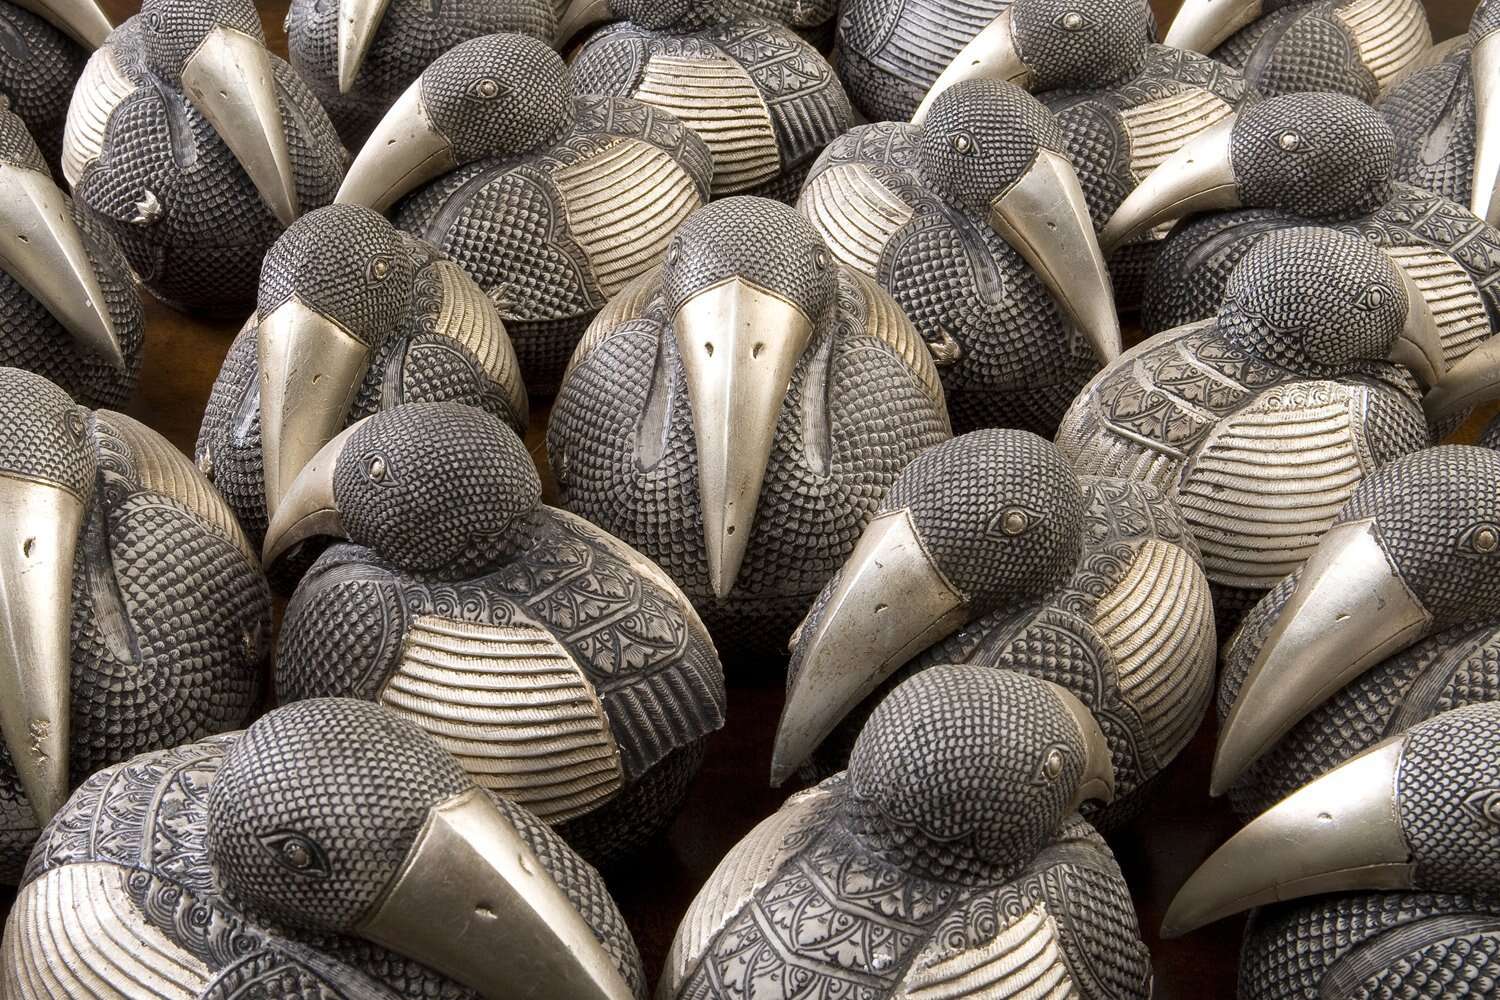 Silver bird sculpture charming sculptures gifts presents